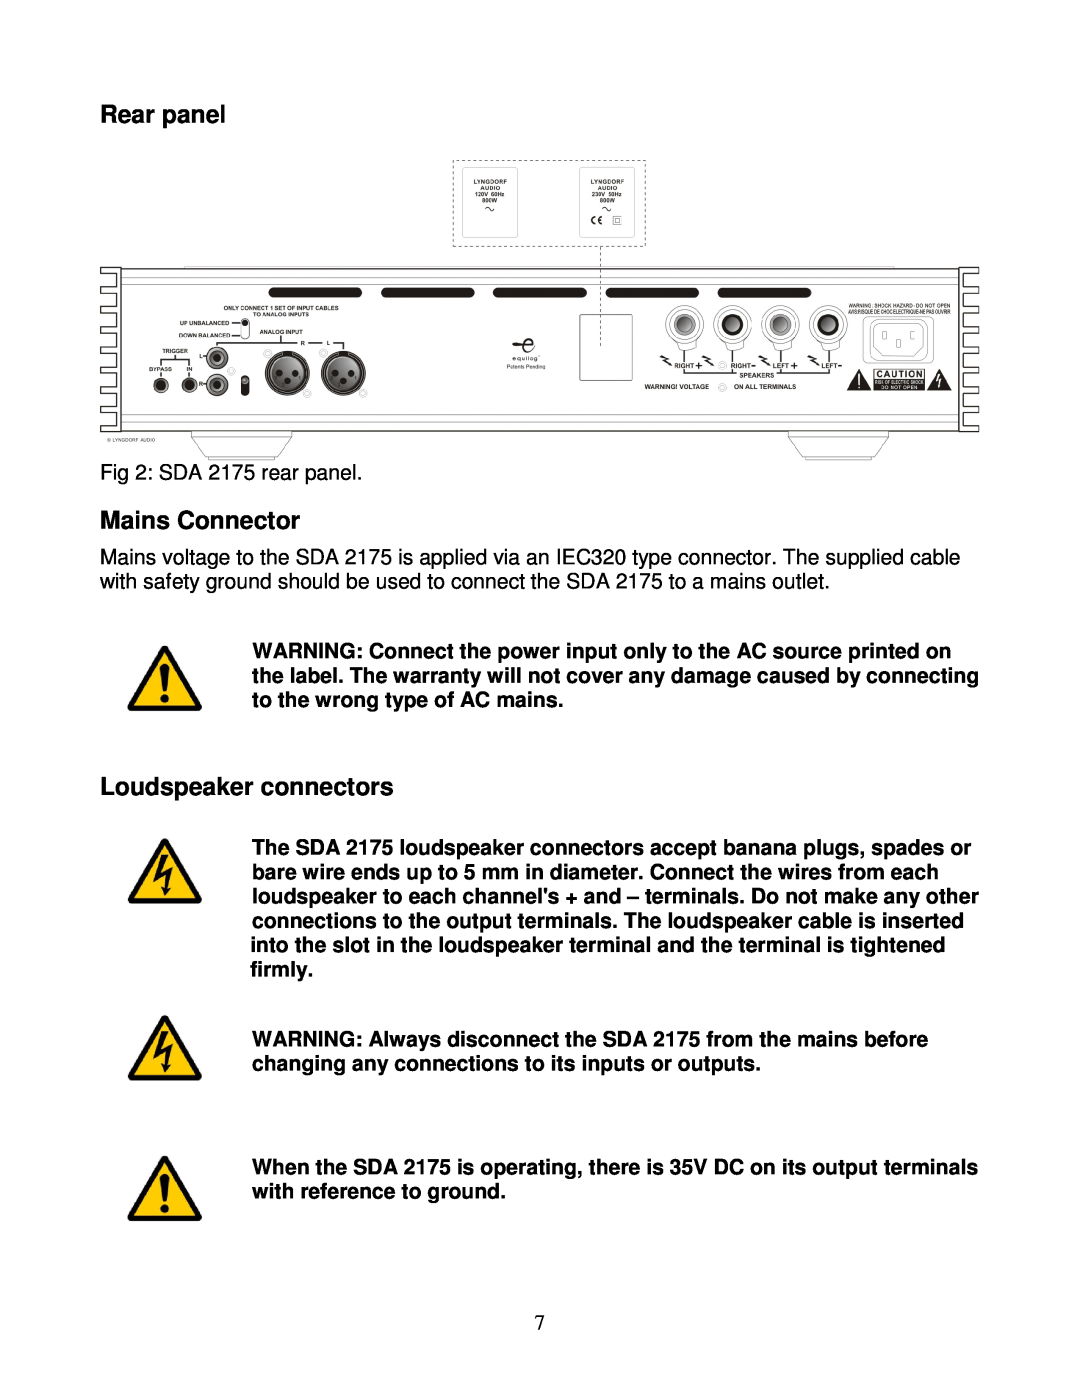 Lyngdorf Audio owner manual Rear panel, Mains Connector, Loudspeaker connectors, SDA 2175 rear panel 